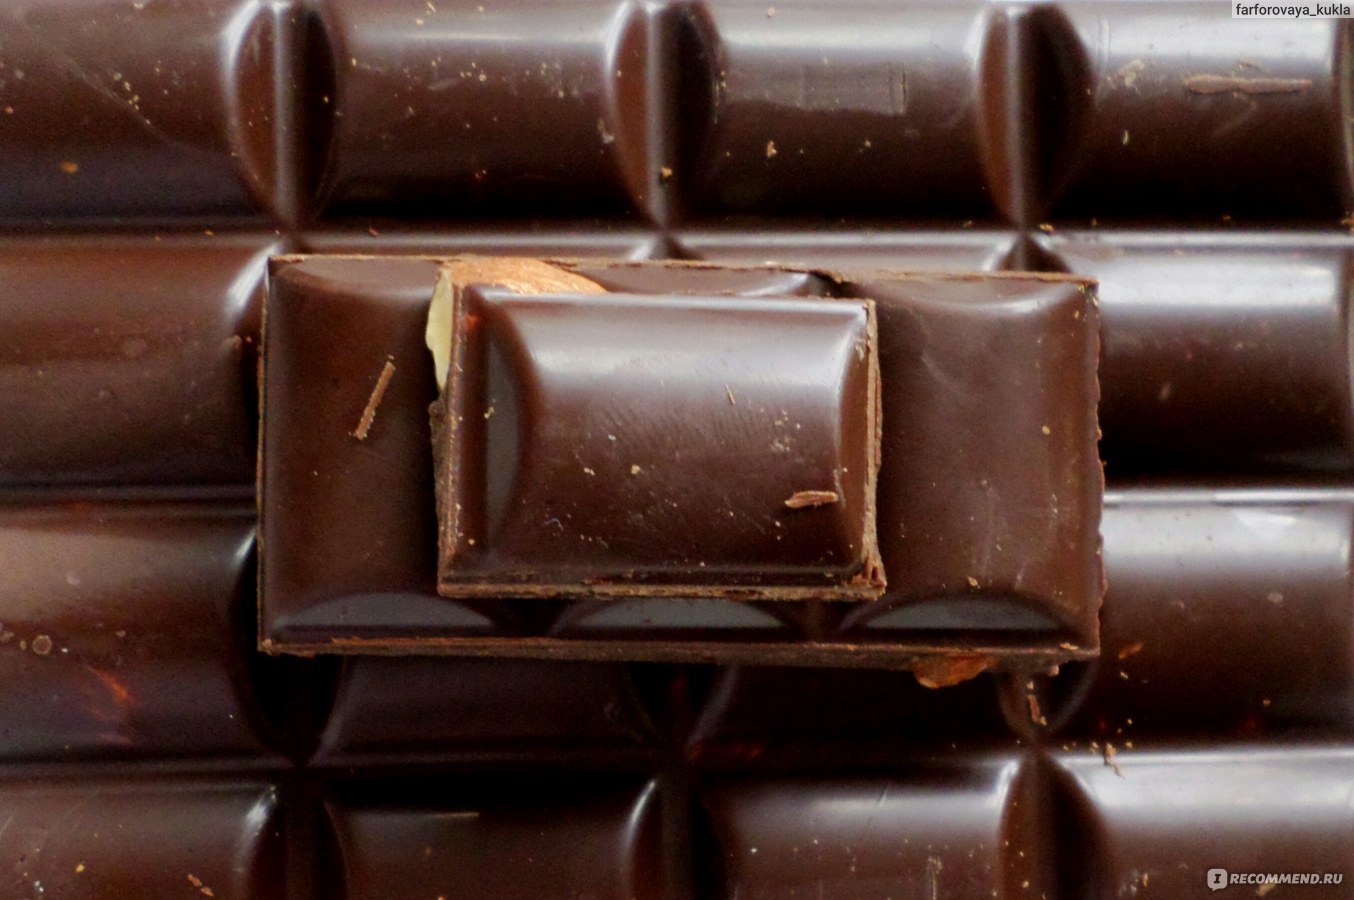 Горький шоколад с миндалем. Горький пористый шоколад. Горький вкус шоколада. Белорусский Горький шоколад. Шоколад с миндалем ручной работы.